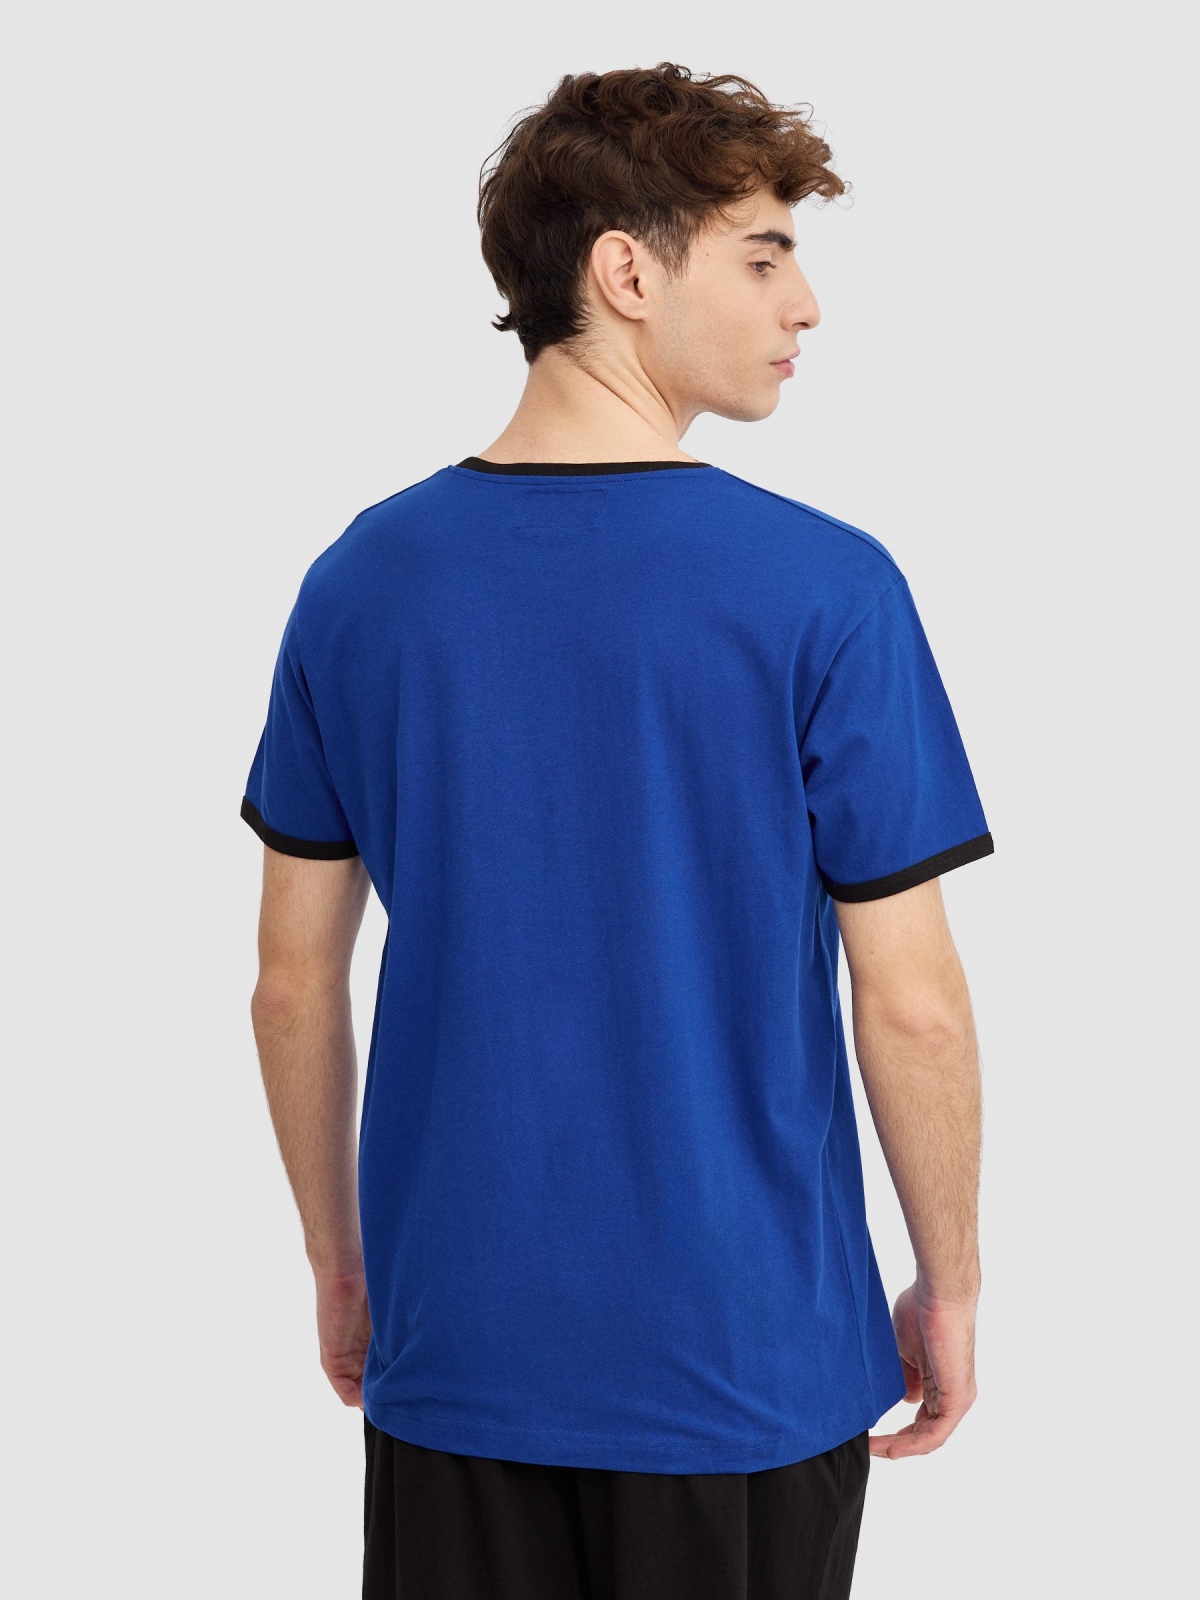 Short sleeve pyjamas blue back view